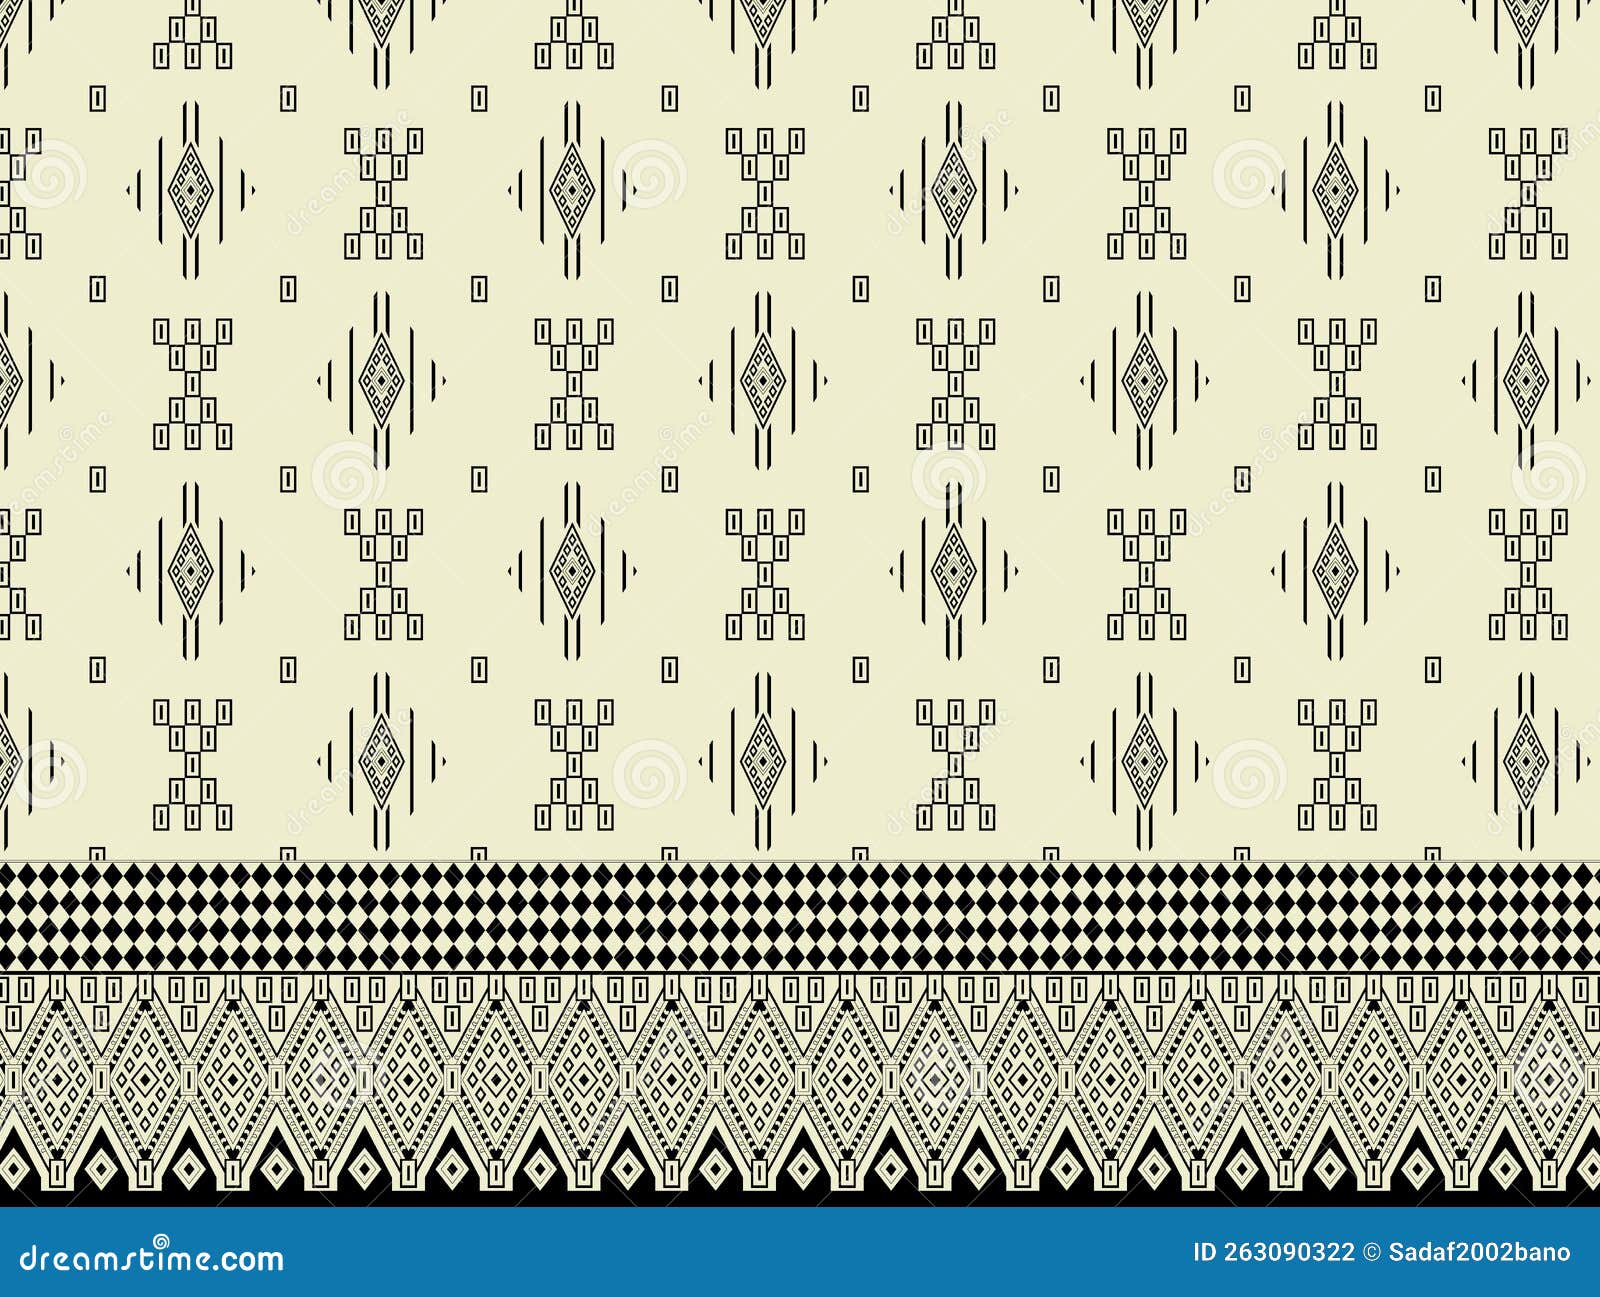 Digital Print for Ladies Shirt Front Designs. Digital Baroque Border Motif  Design Illustration Artwork for Textile Print Stock Vector - Illustration  of pattern, beautiful: 263090322